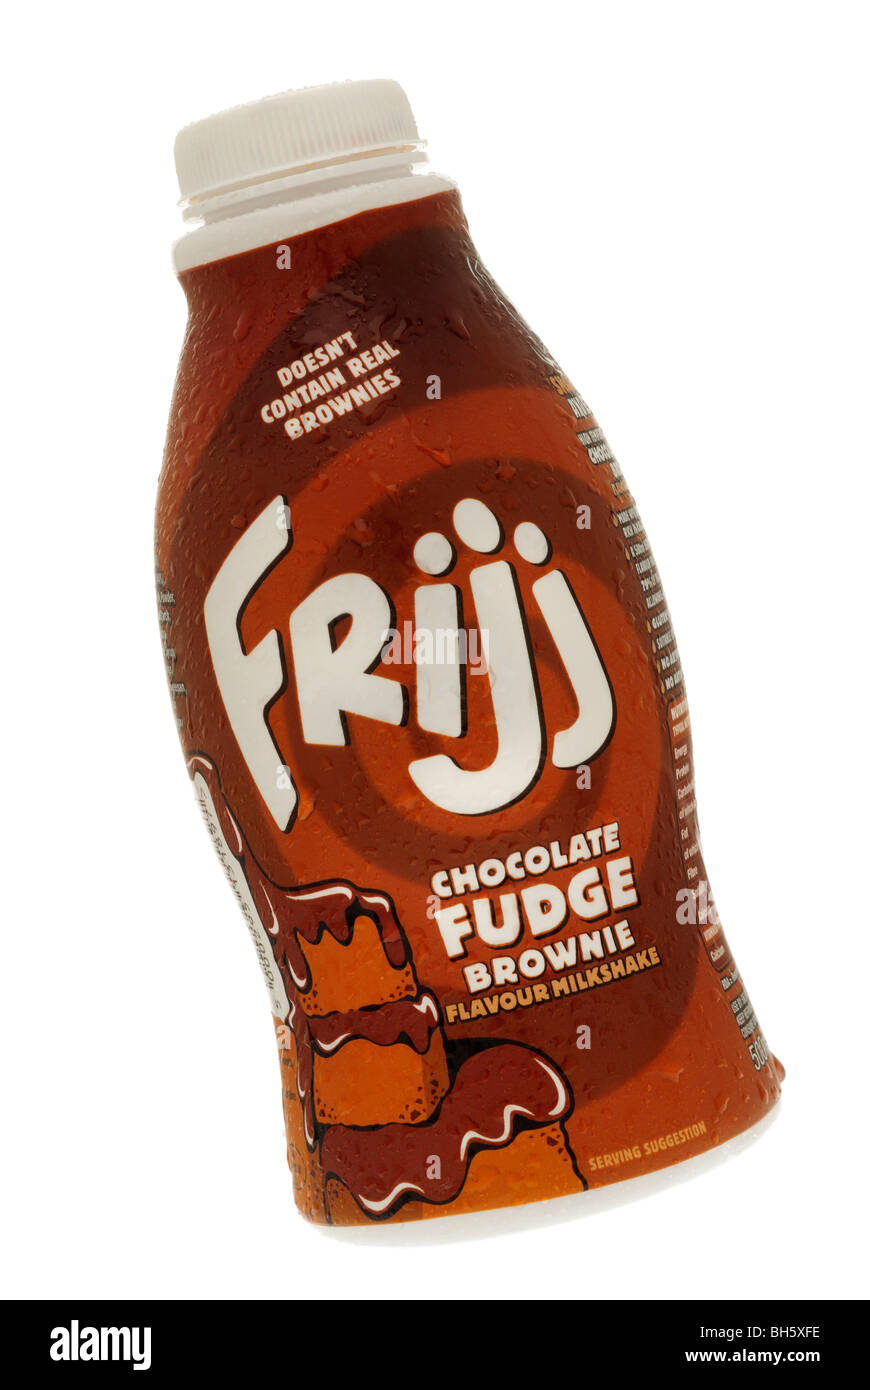 Bottle of Frijj Chocolate Fudge Brownie Flavour Milkshake Stock Photo